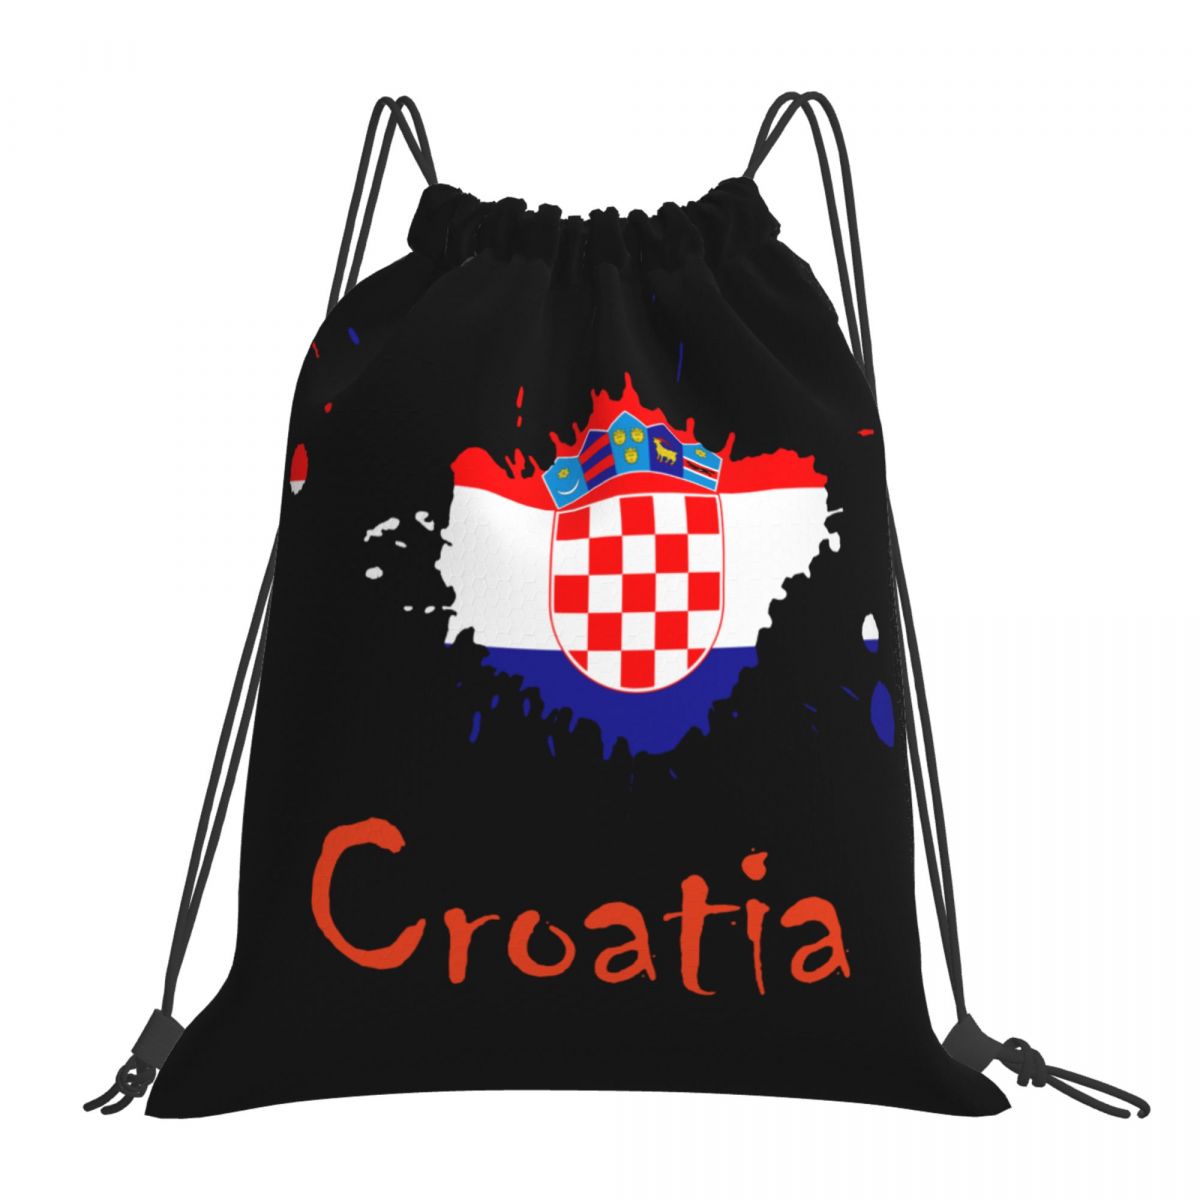 Croatia Ink Spatter Unisex Drawstring Backpack Bag Travel Sackpack